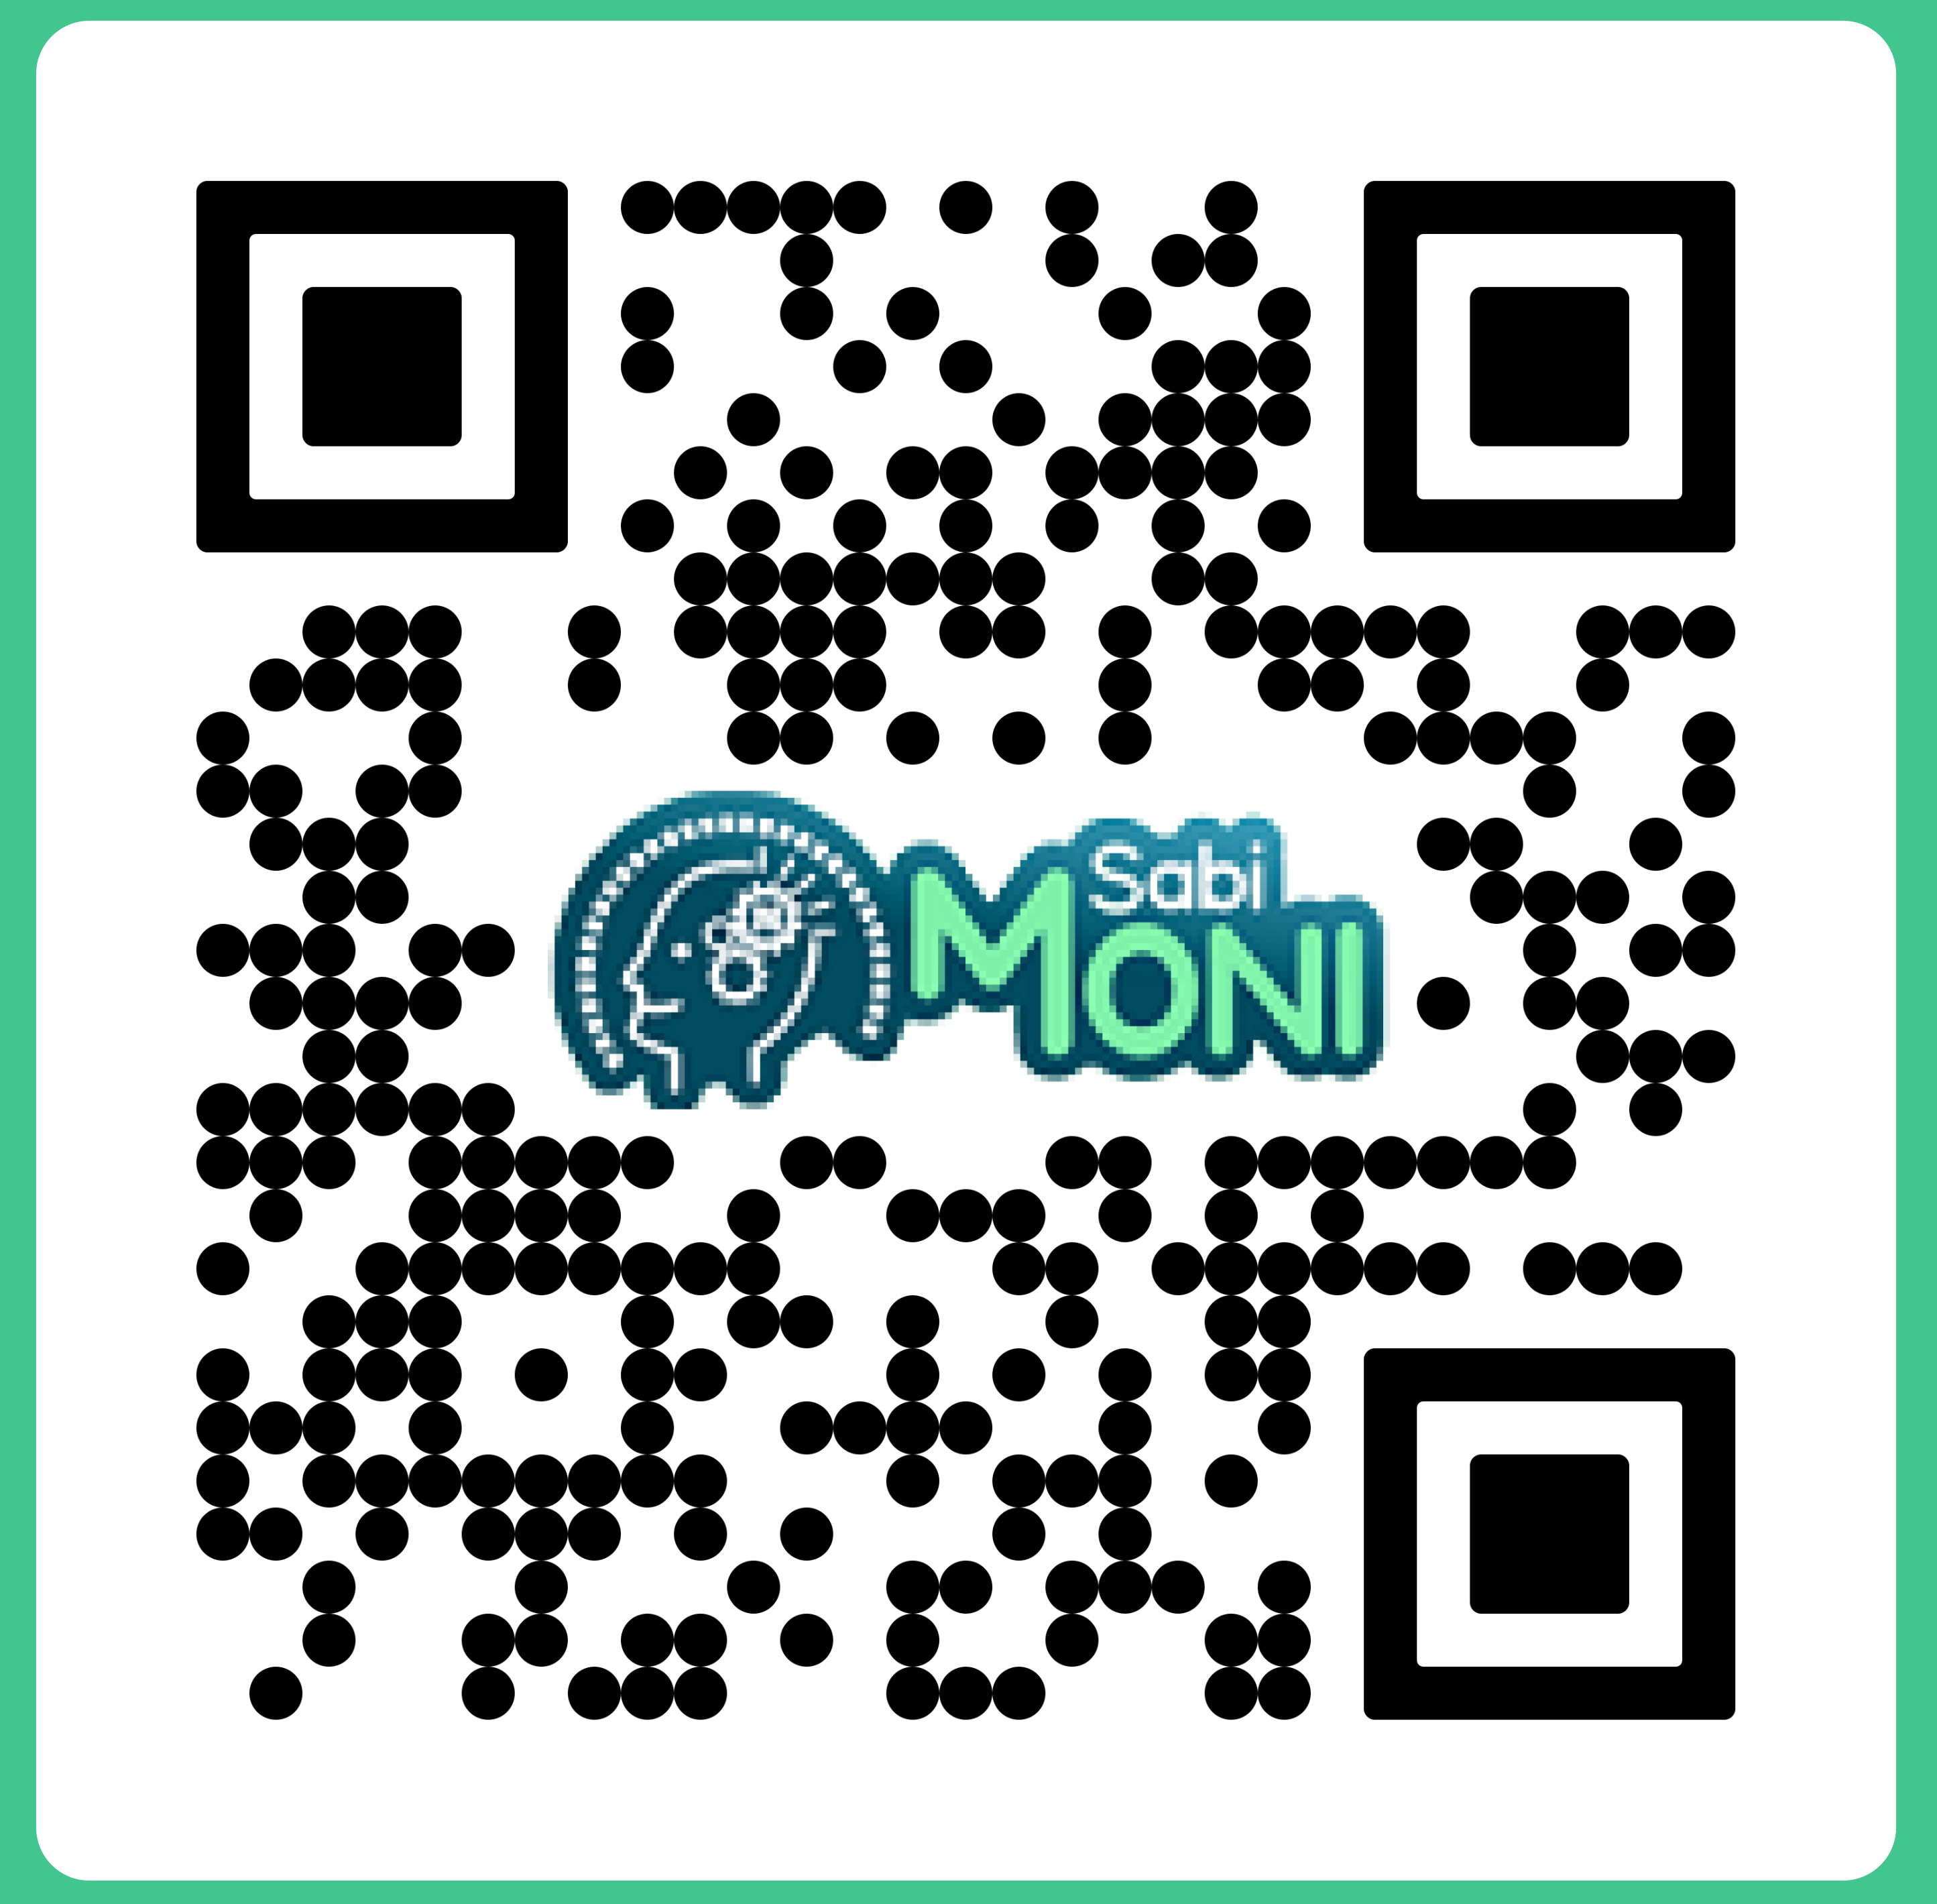 Sabi MONI Mobile Application